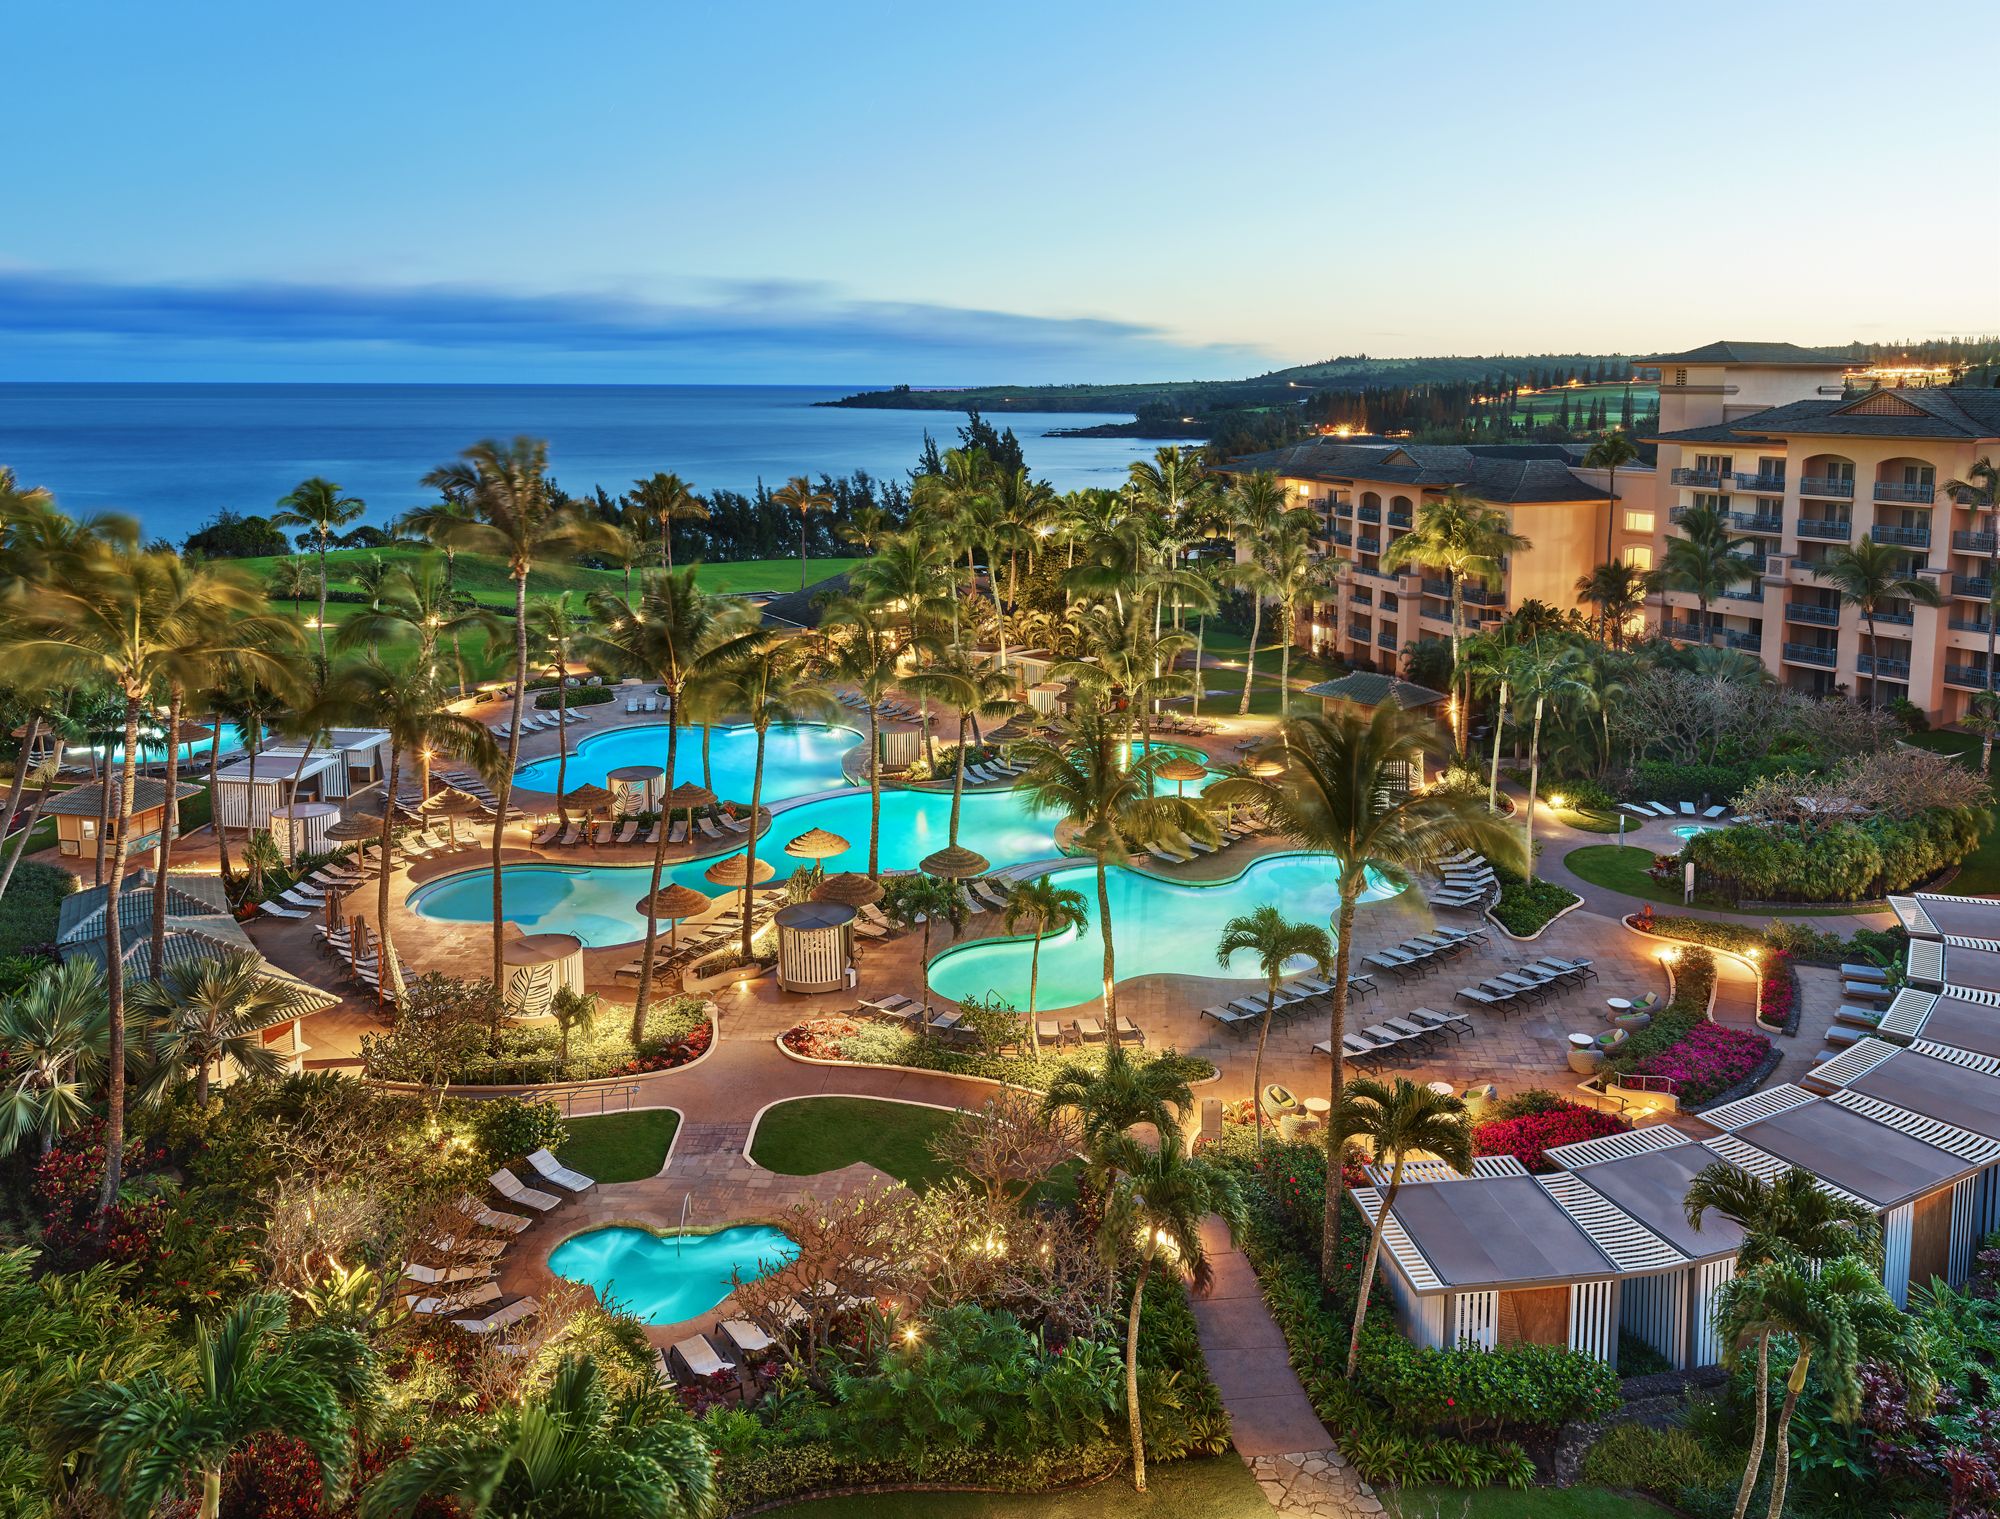 5 Best Luxury Hotels on Maui 2023